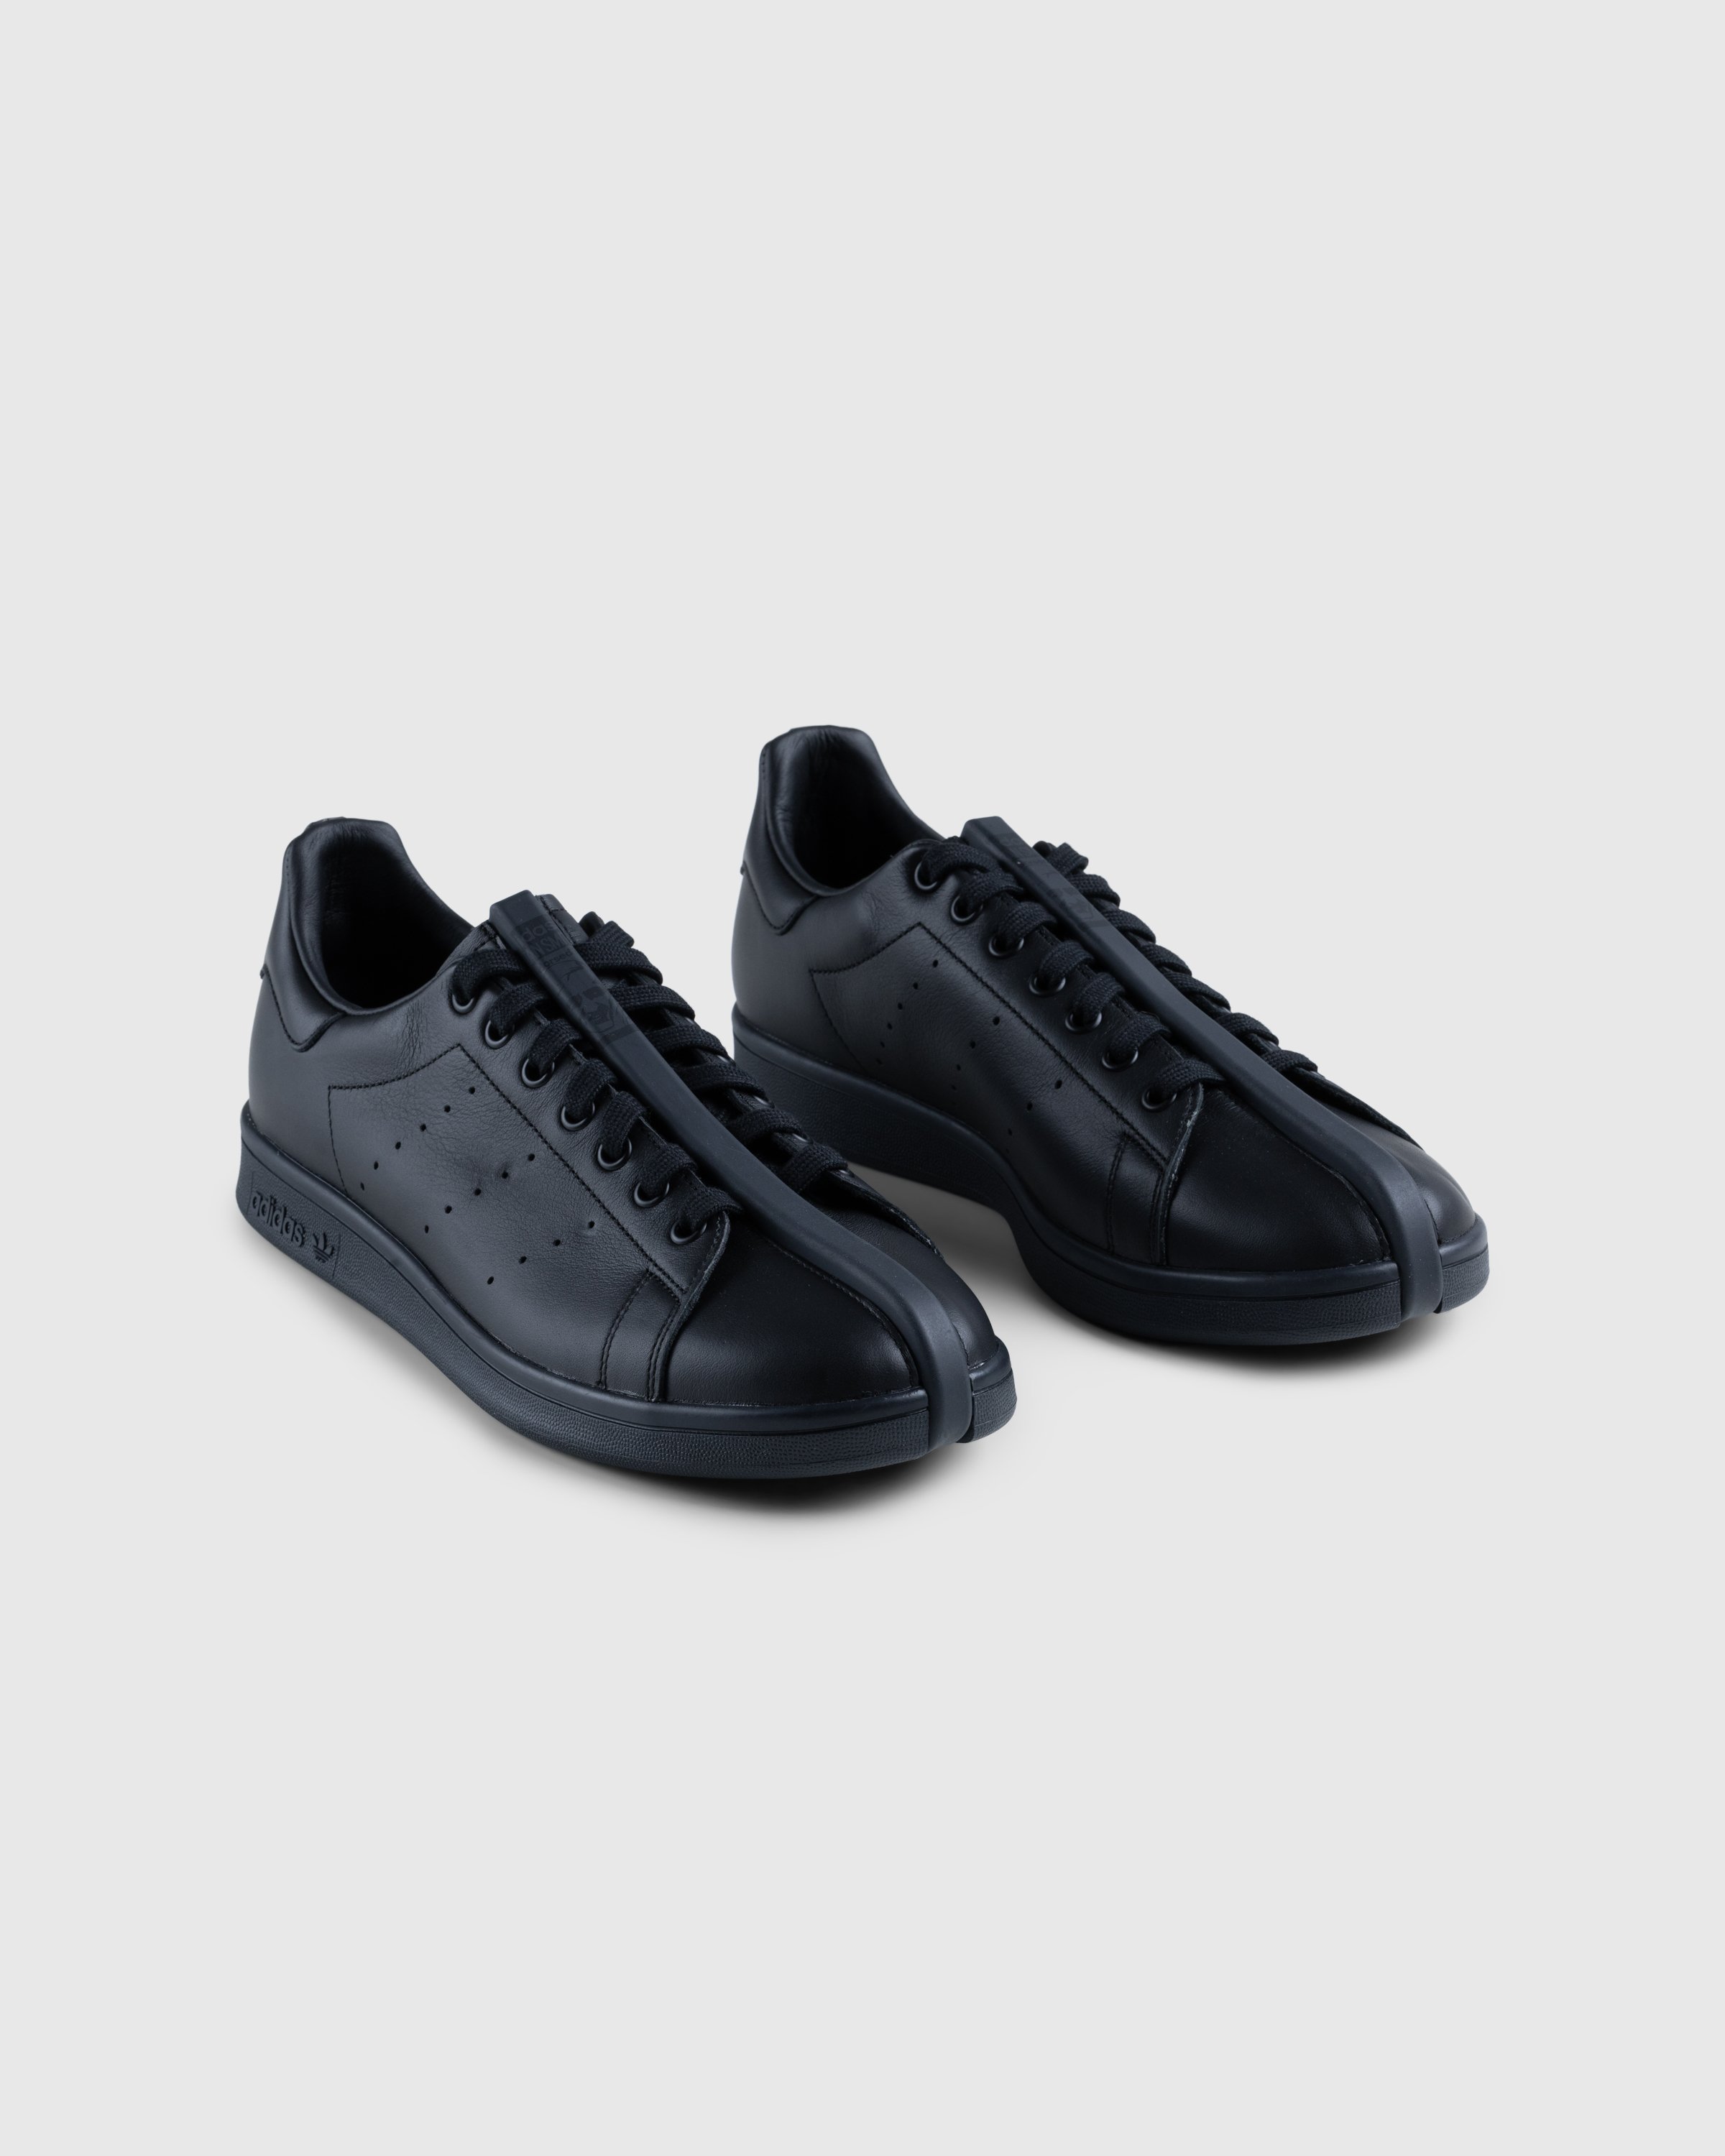 Craig Green x Adidas - CG Split Stan Smith core black/core black/granite - Footwear - Black - Image 3